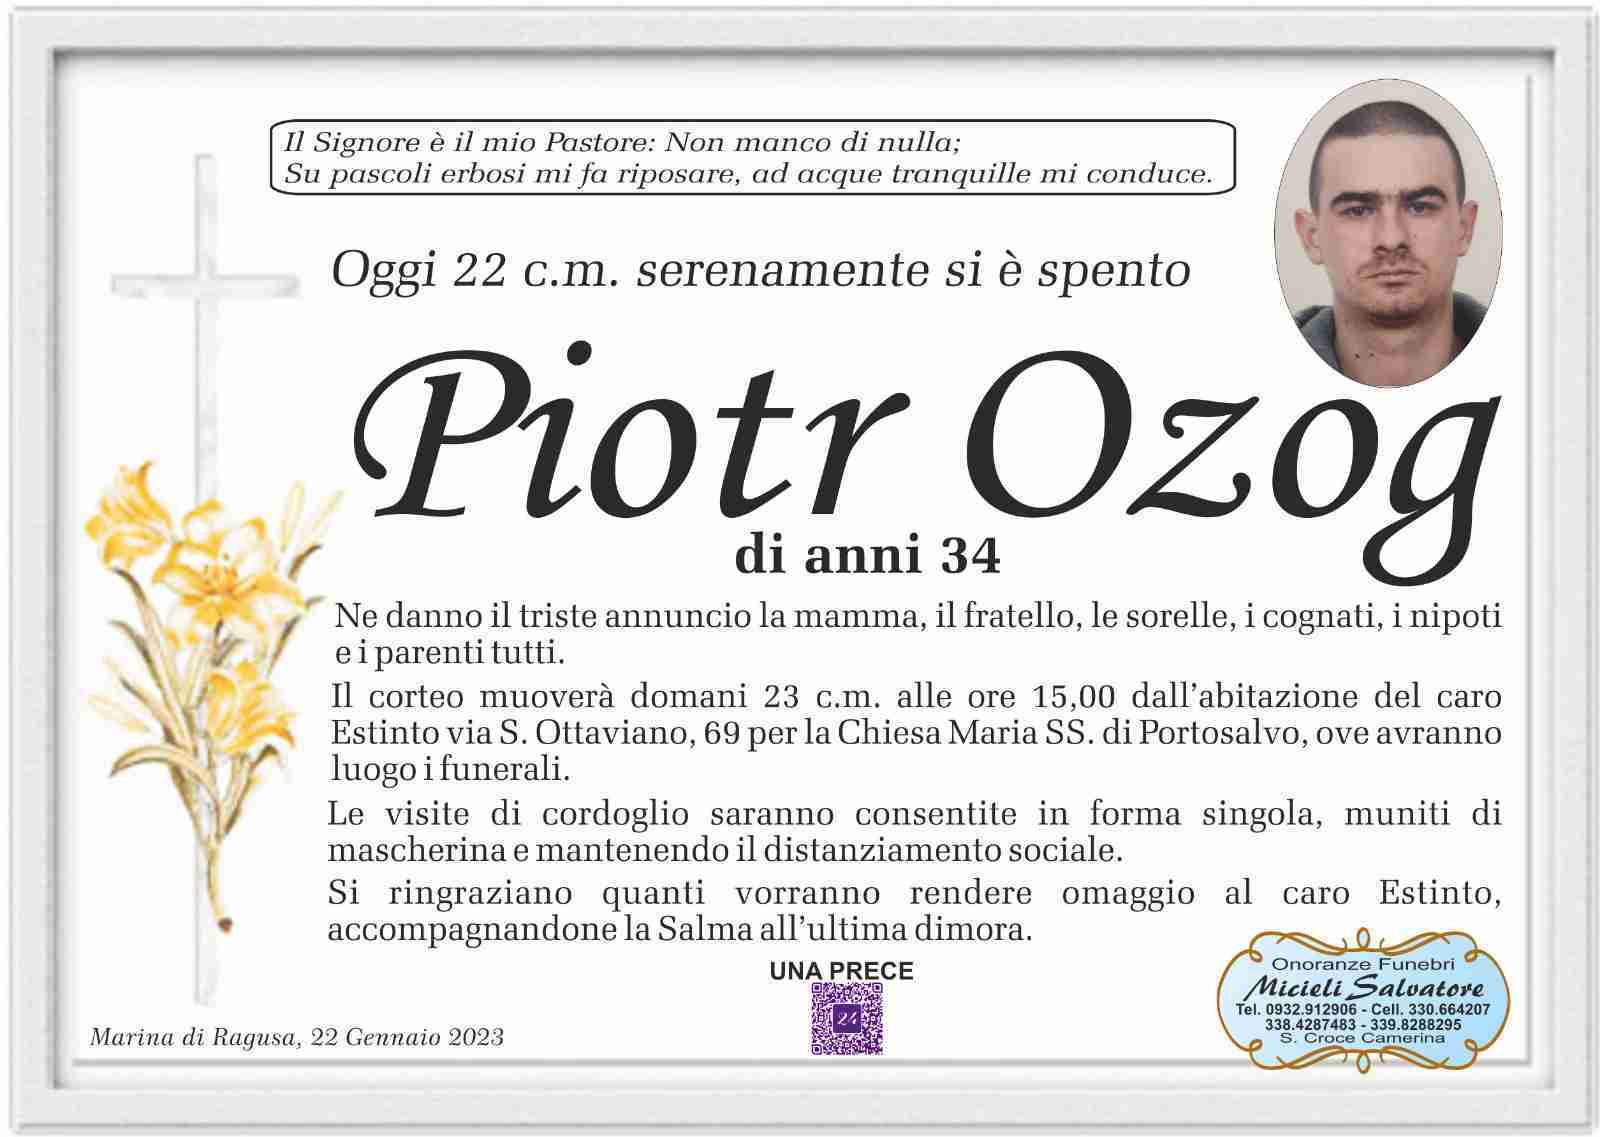 Piotr Ozog